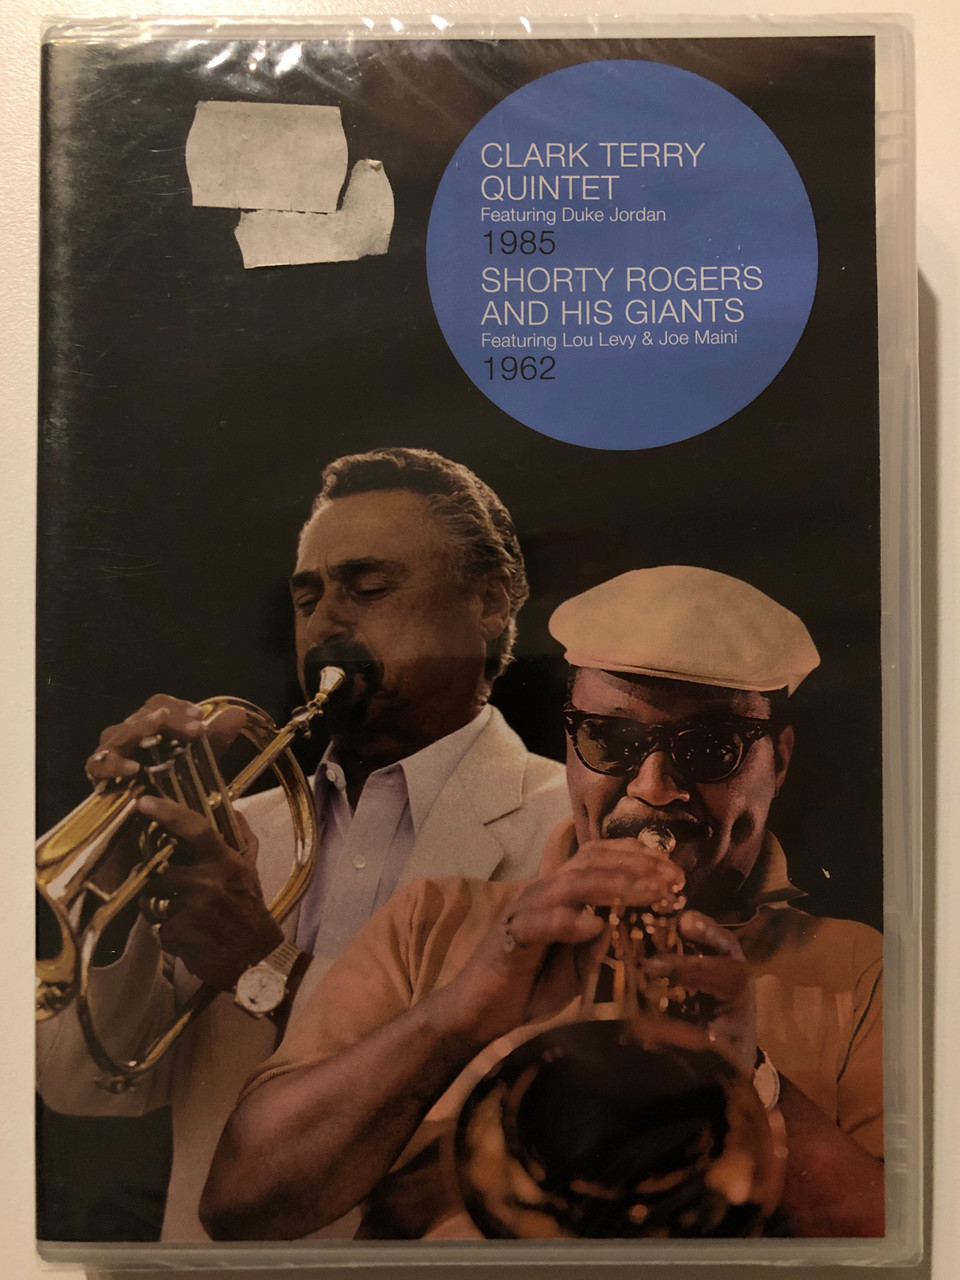 Clark Terry Quintet: Copenhagen 1985 / Shorty Rogers and His Giants: 1962 /  Live at Club Montmartre / Featuring Duke Jordan 1985 / Featuring Lou Levy &  Joe Maini 1962 / ©2008